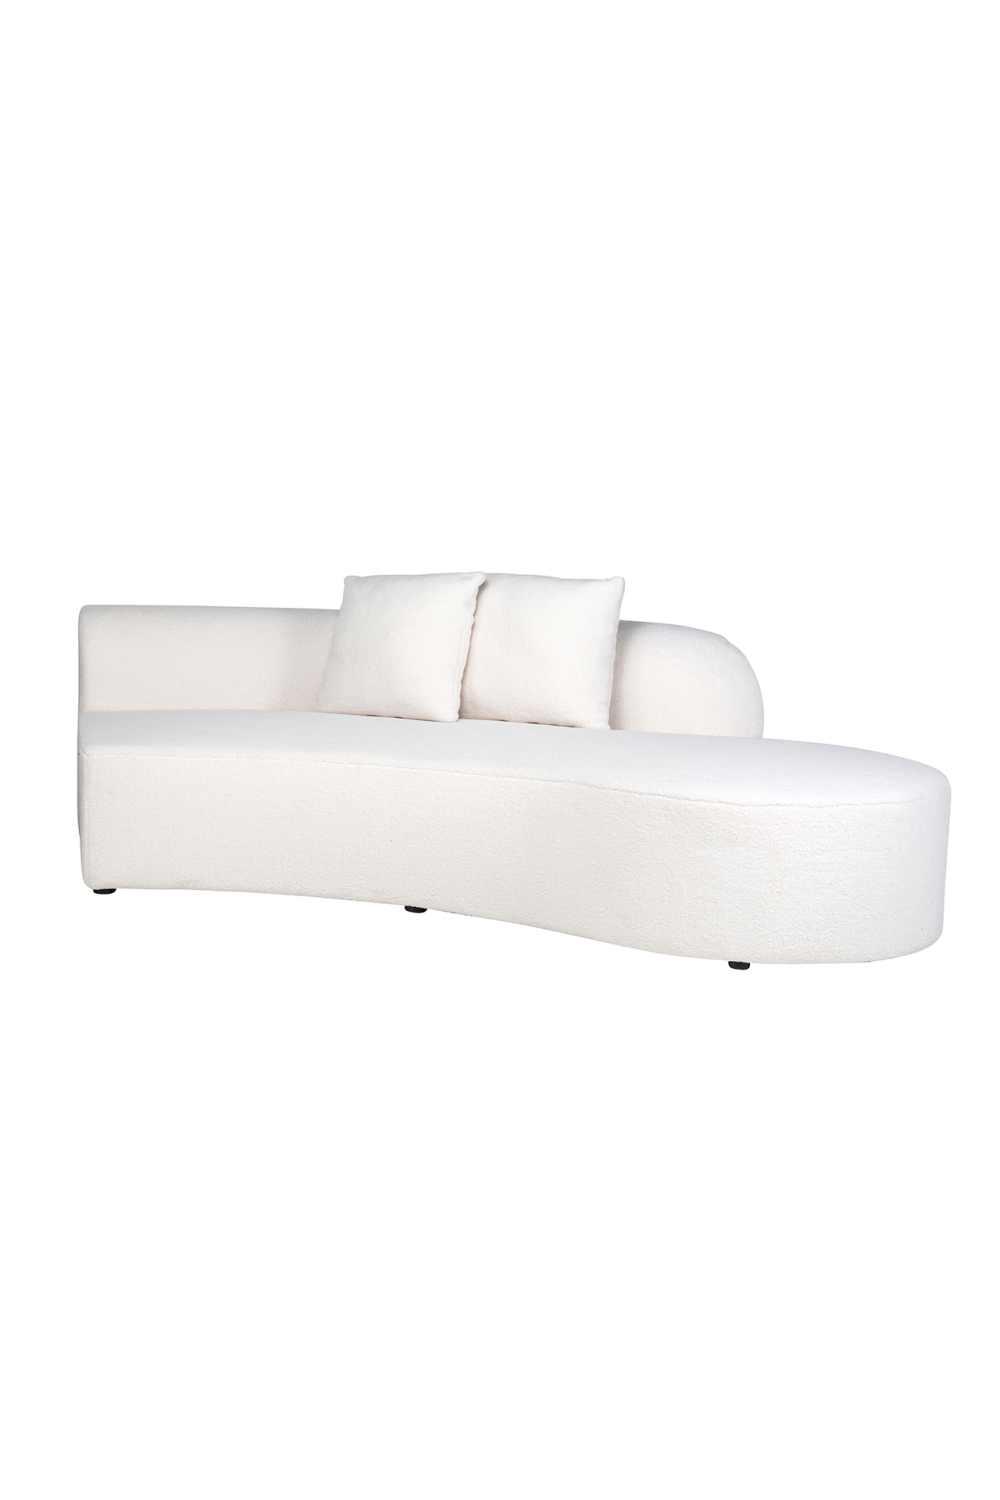 White Curved Upholstered Sofa | OROA Grayson | Oroa.com